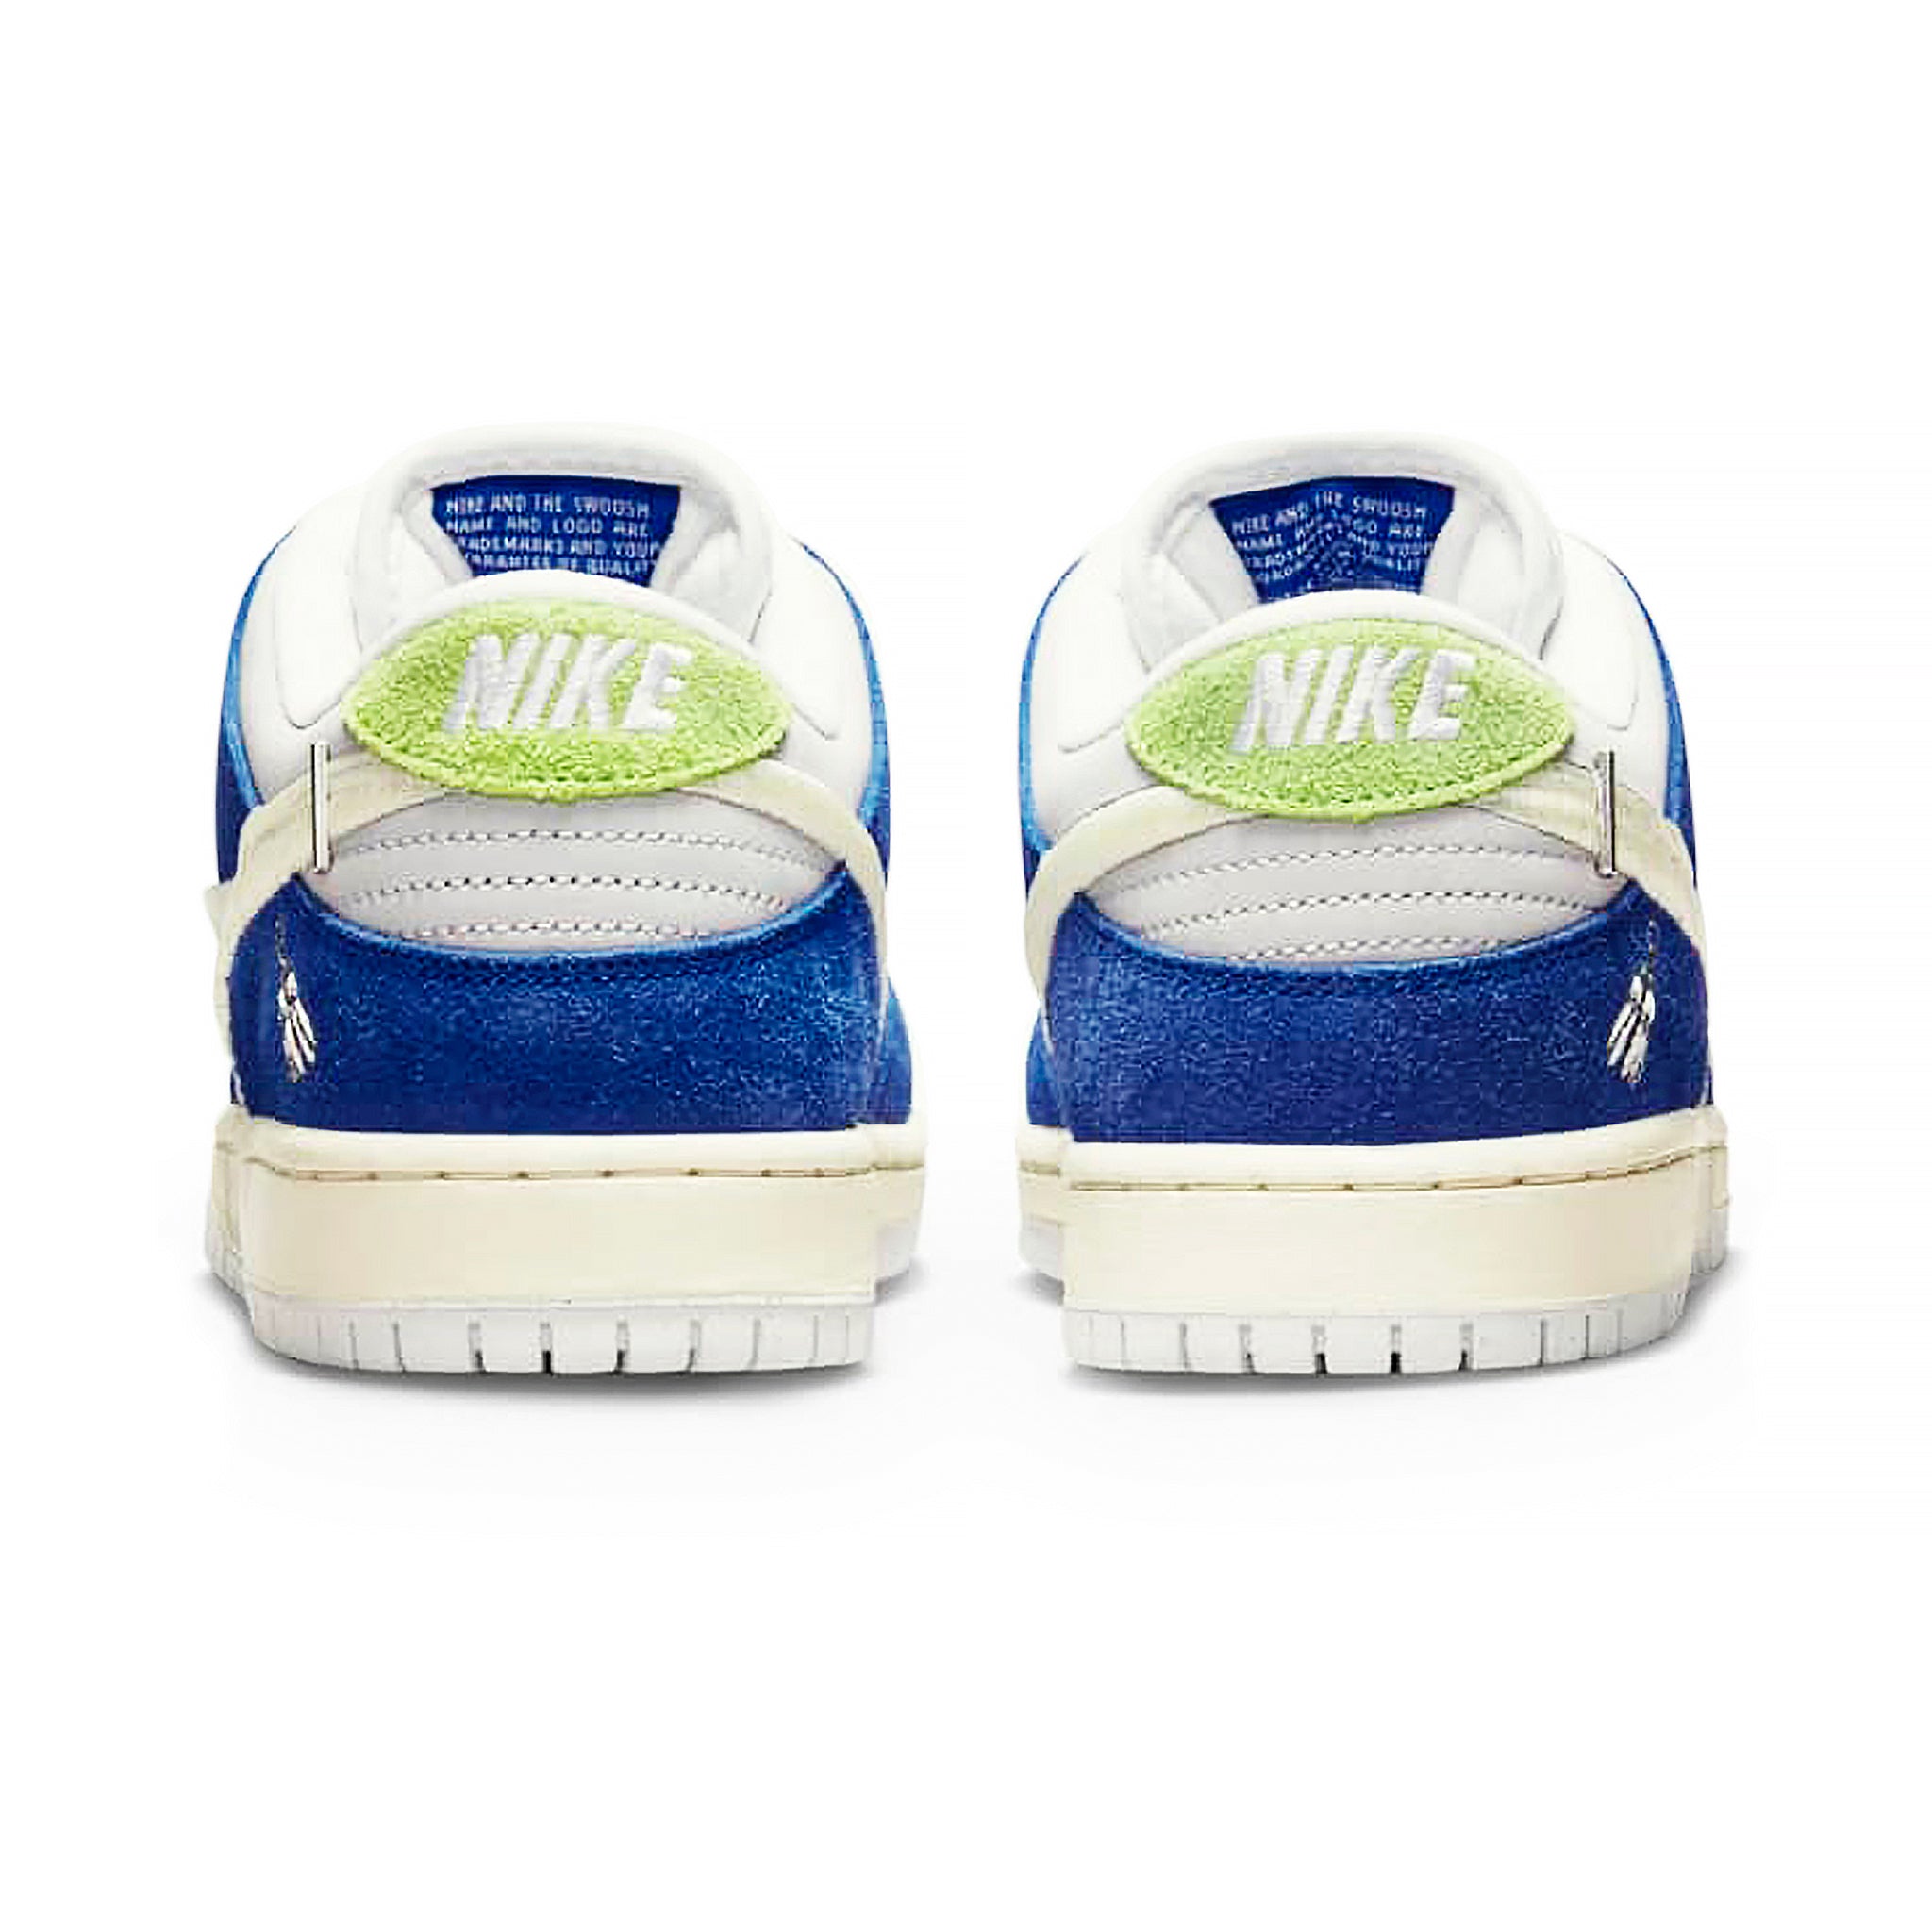 Image of Fly Streetwear x Nike SB Dunk Low Pro Gardenia